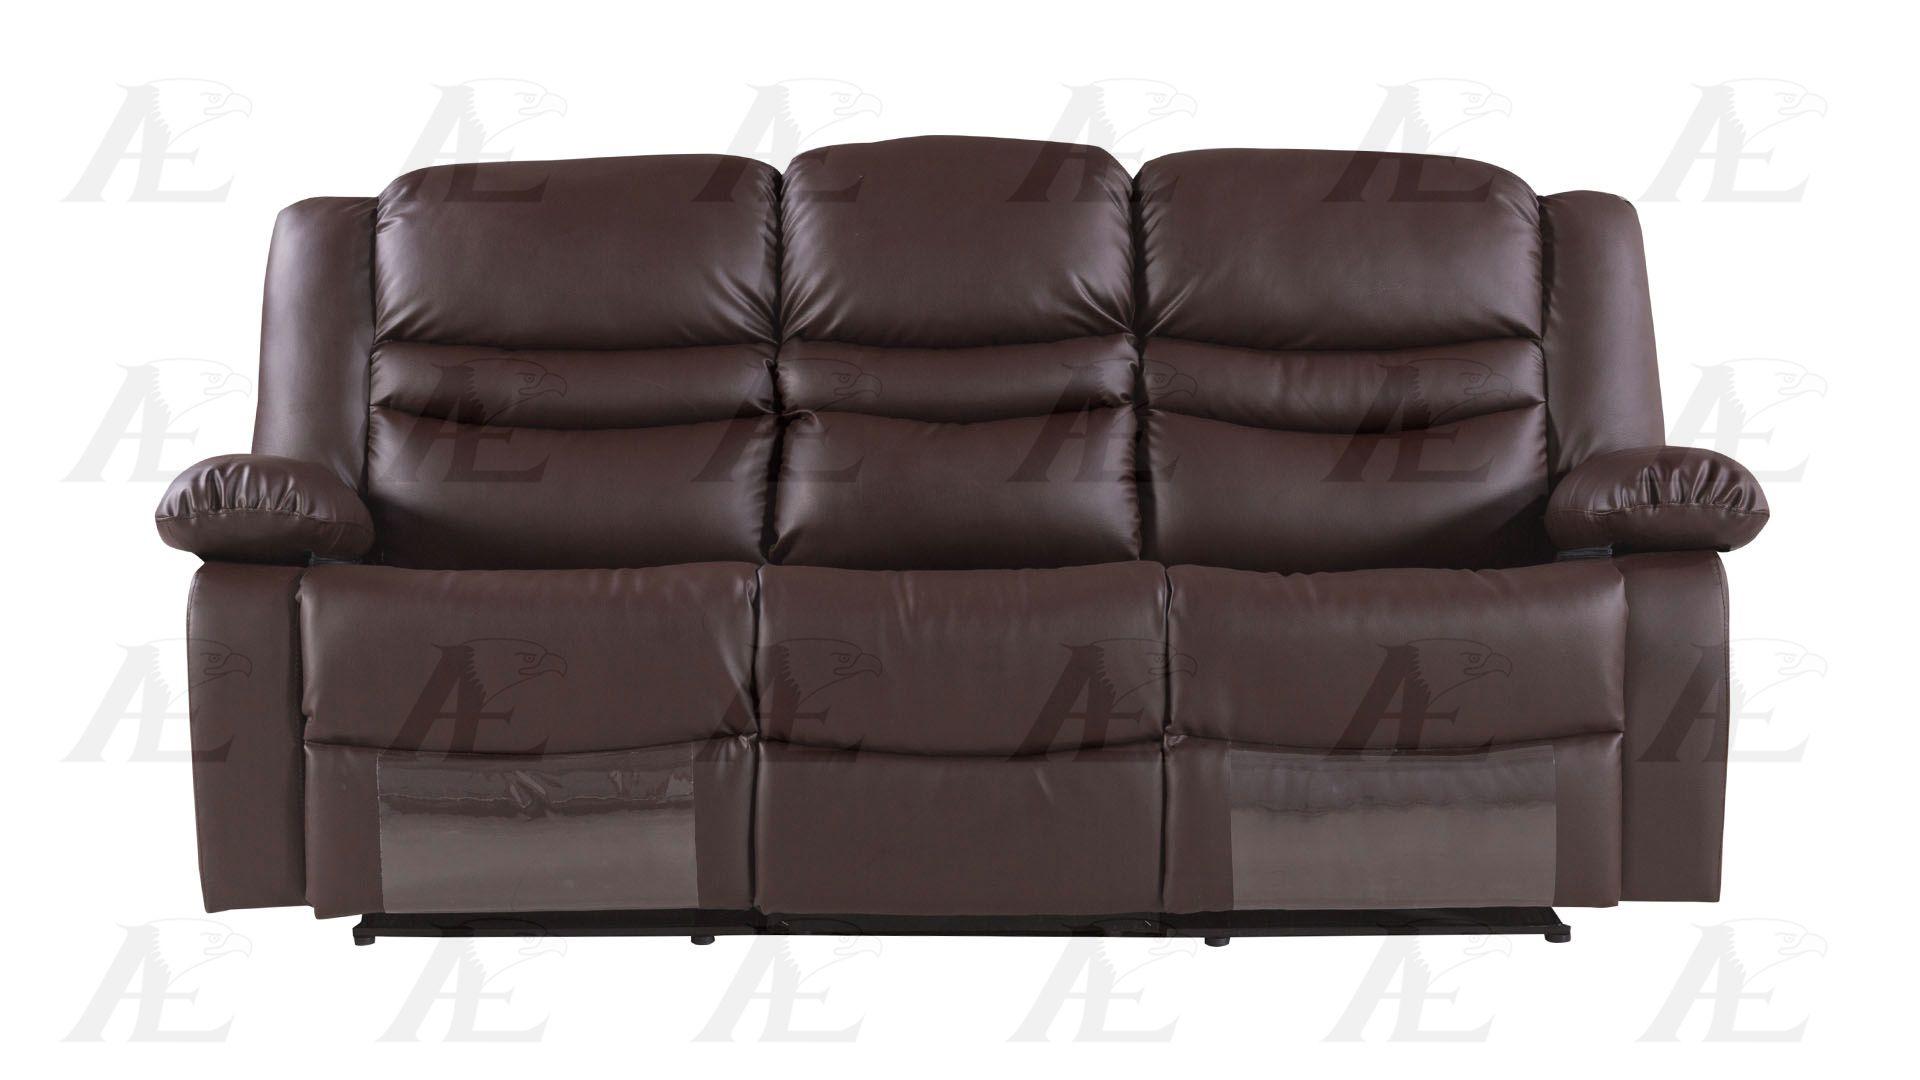 

    
American Eagle Modern AE-D823 Dark Brown Faux Leather Recliner Sofa
